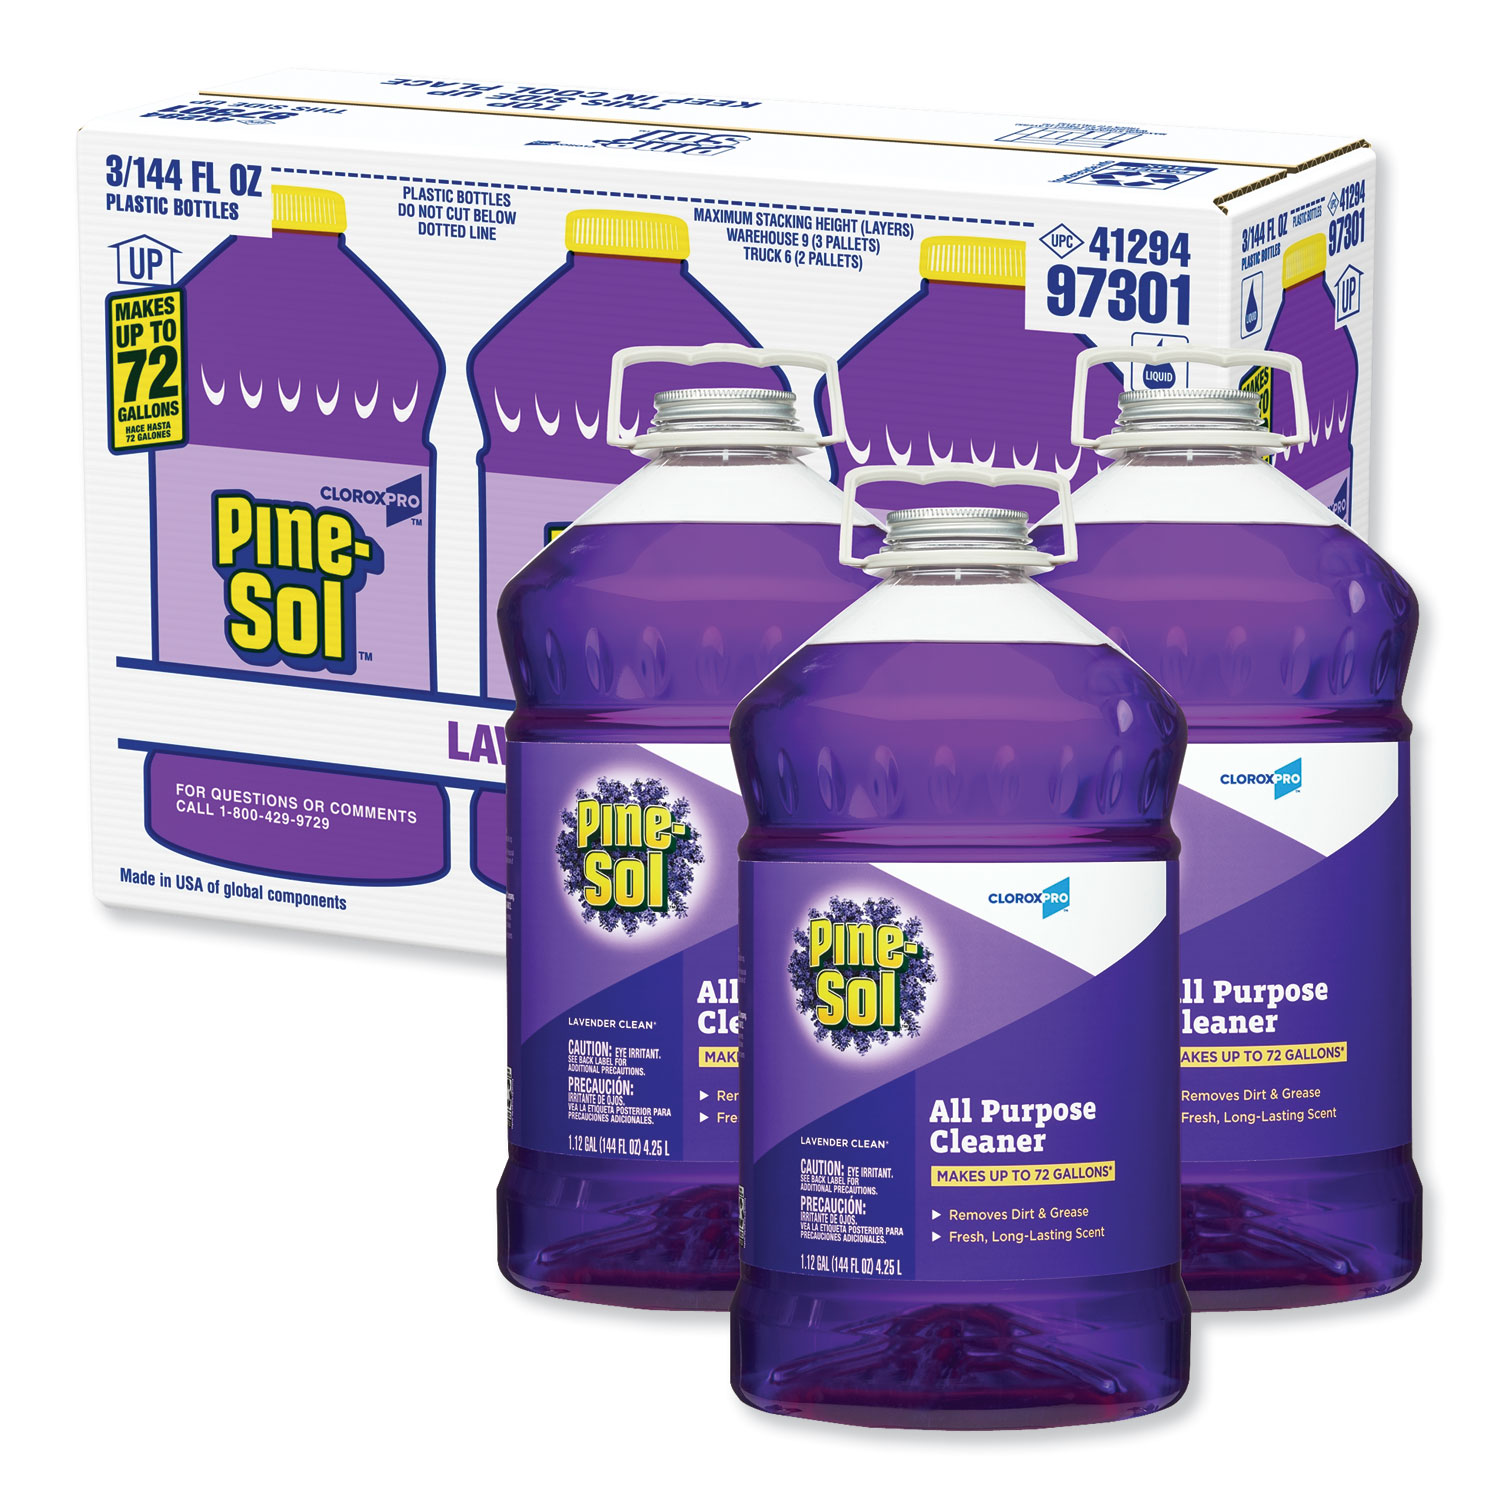  Pine-Sol 97301 All Purpose Cleaner, Lavender Clean, 144 oz Bottle, 3/Carton (CLO97301) 